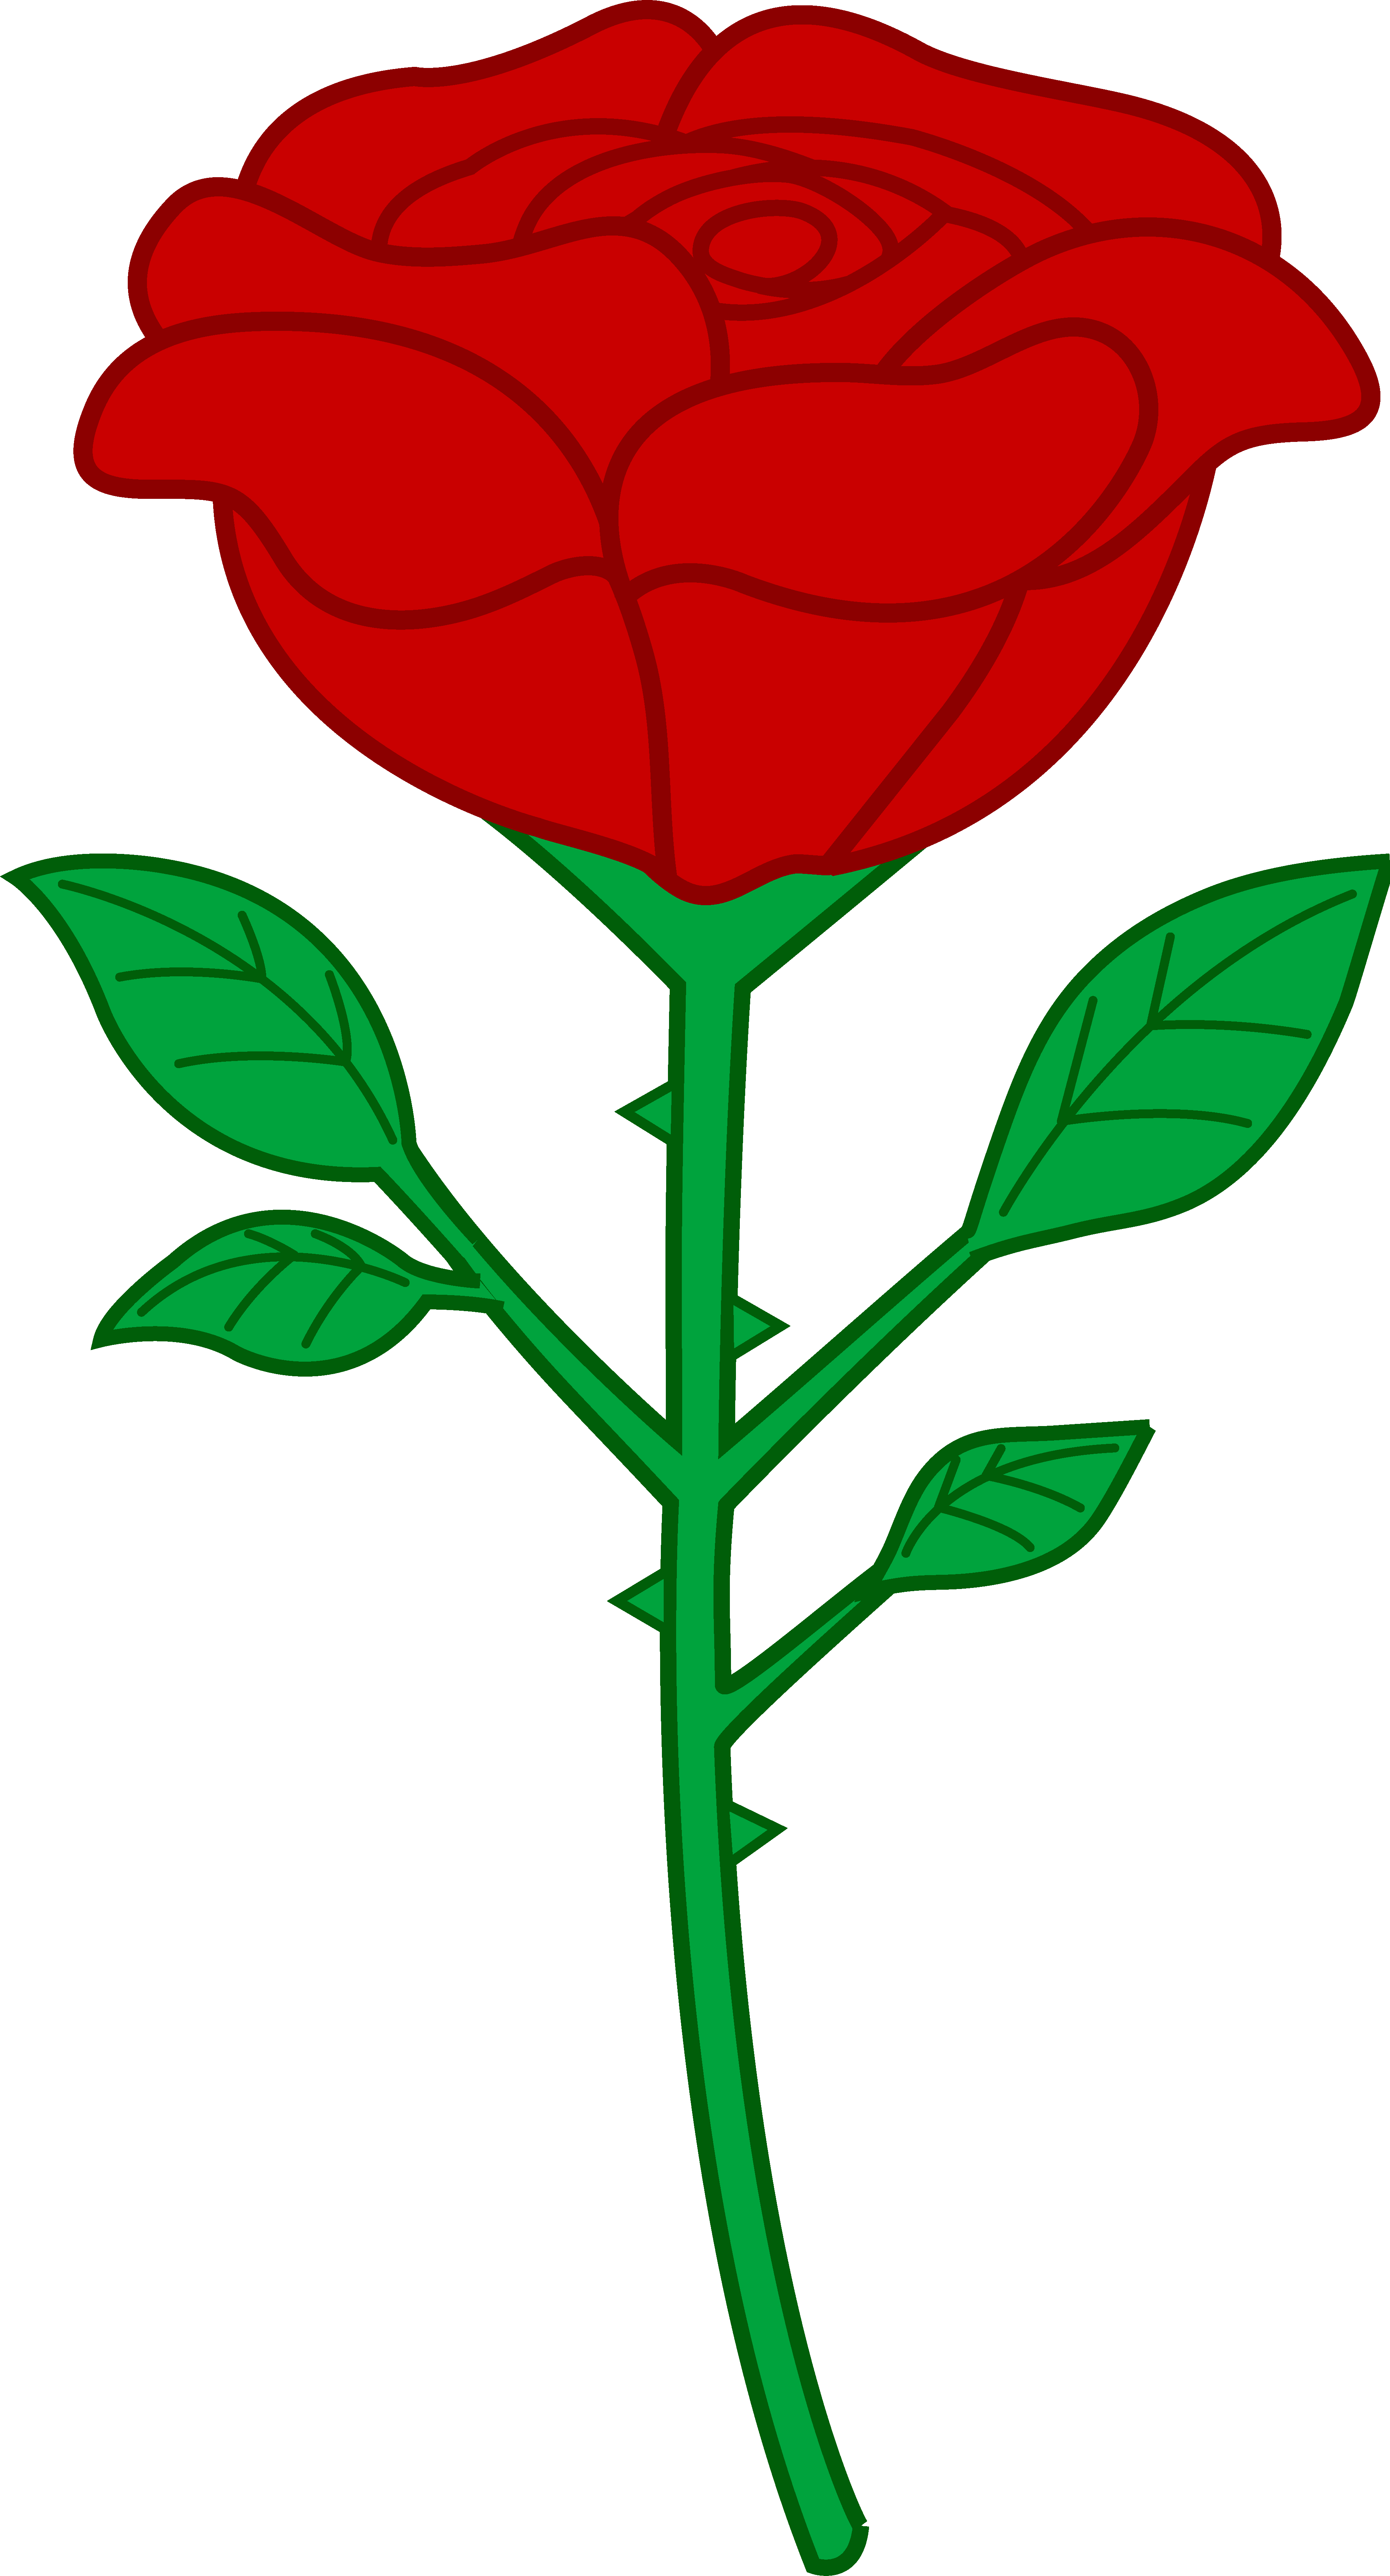 Single red rose clip art